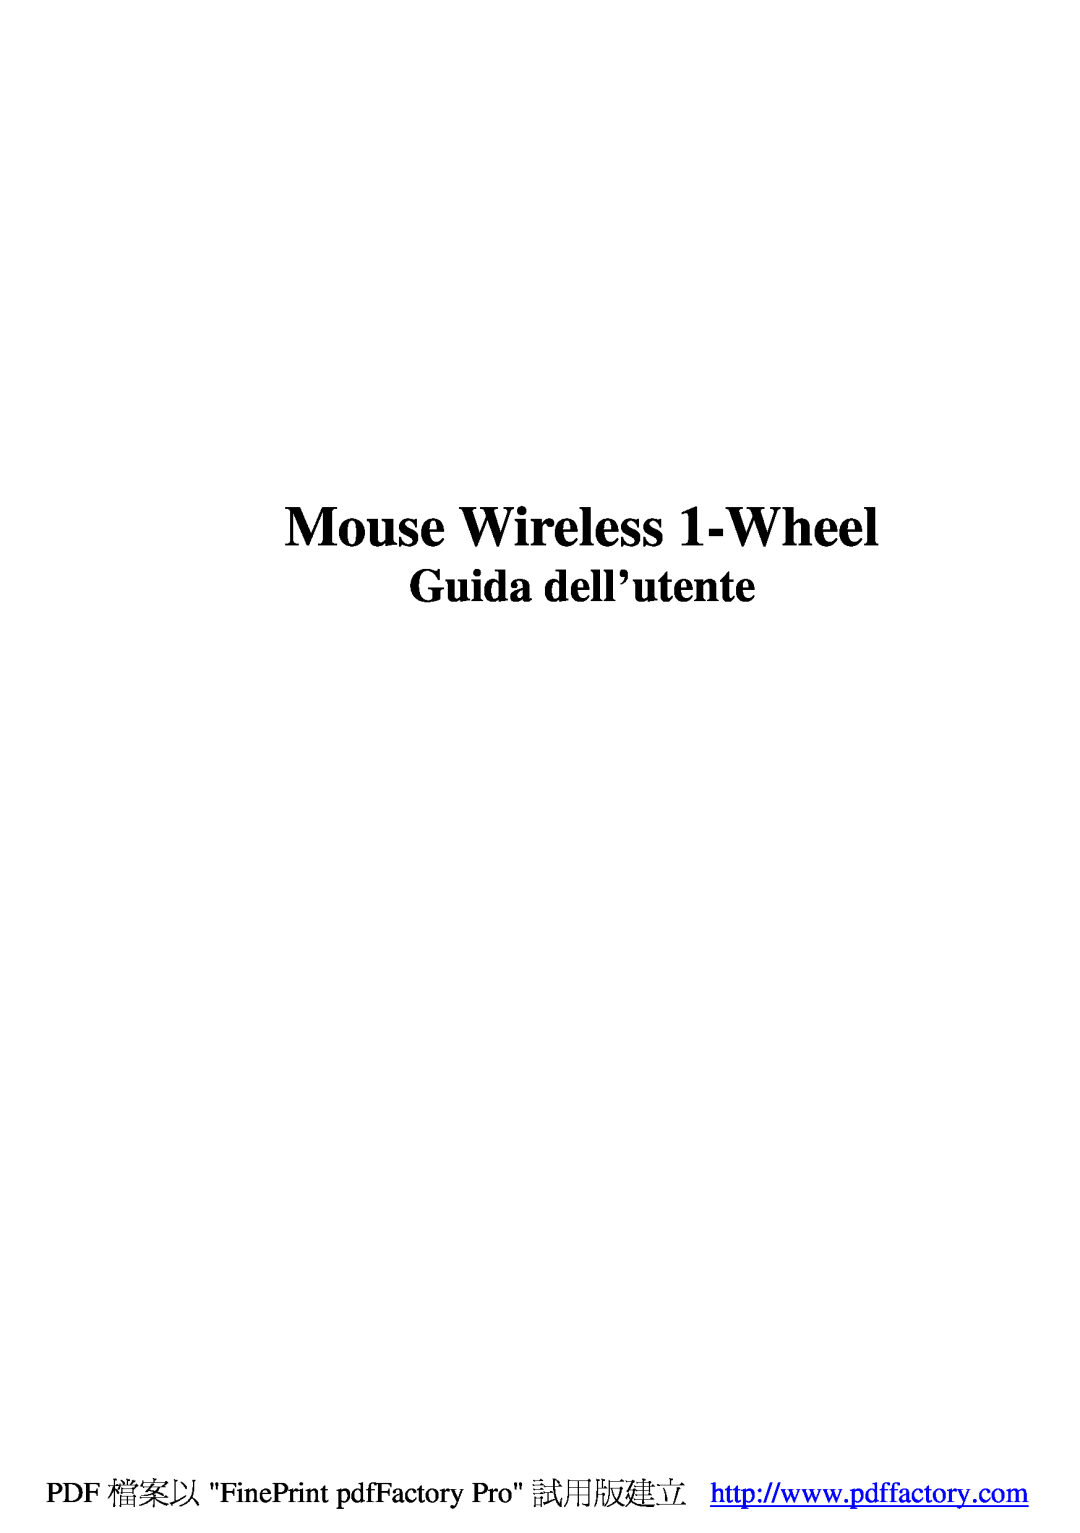 A4 Tech Wireless 1-Wheel Mouse manual Mouse Wireless 1-Wheel, Guida dell’utente 